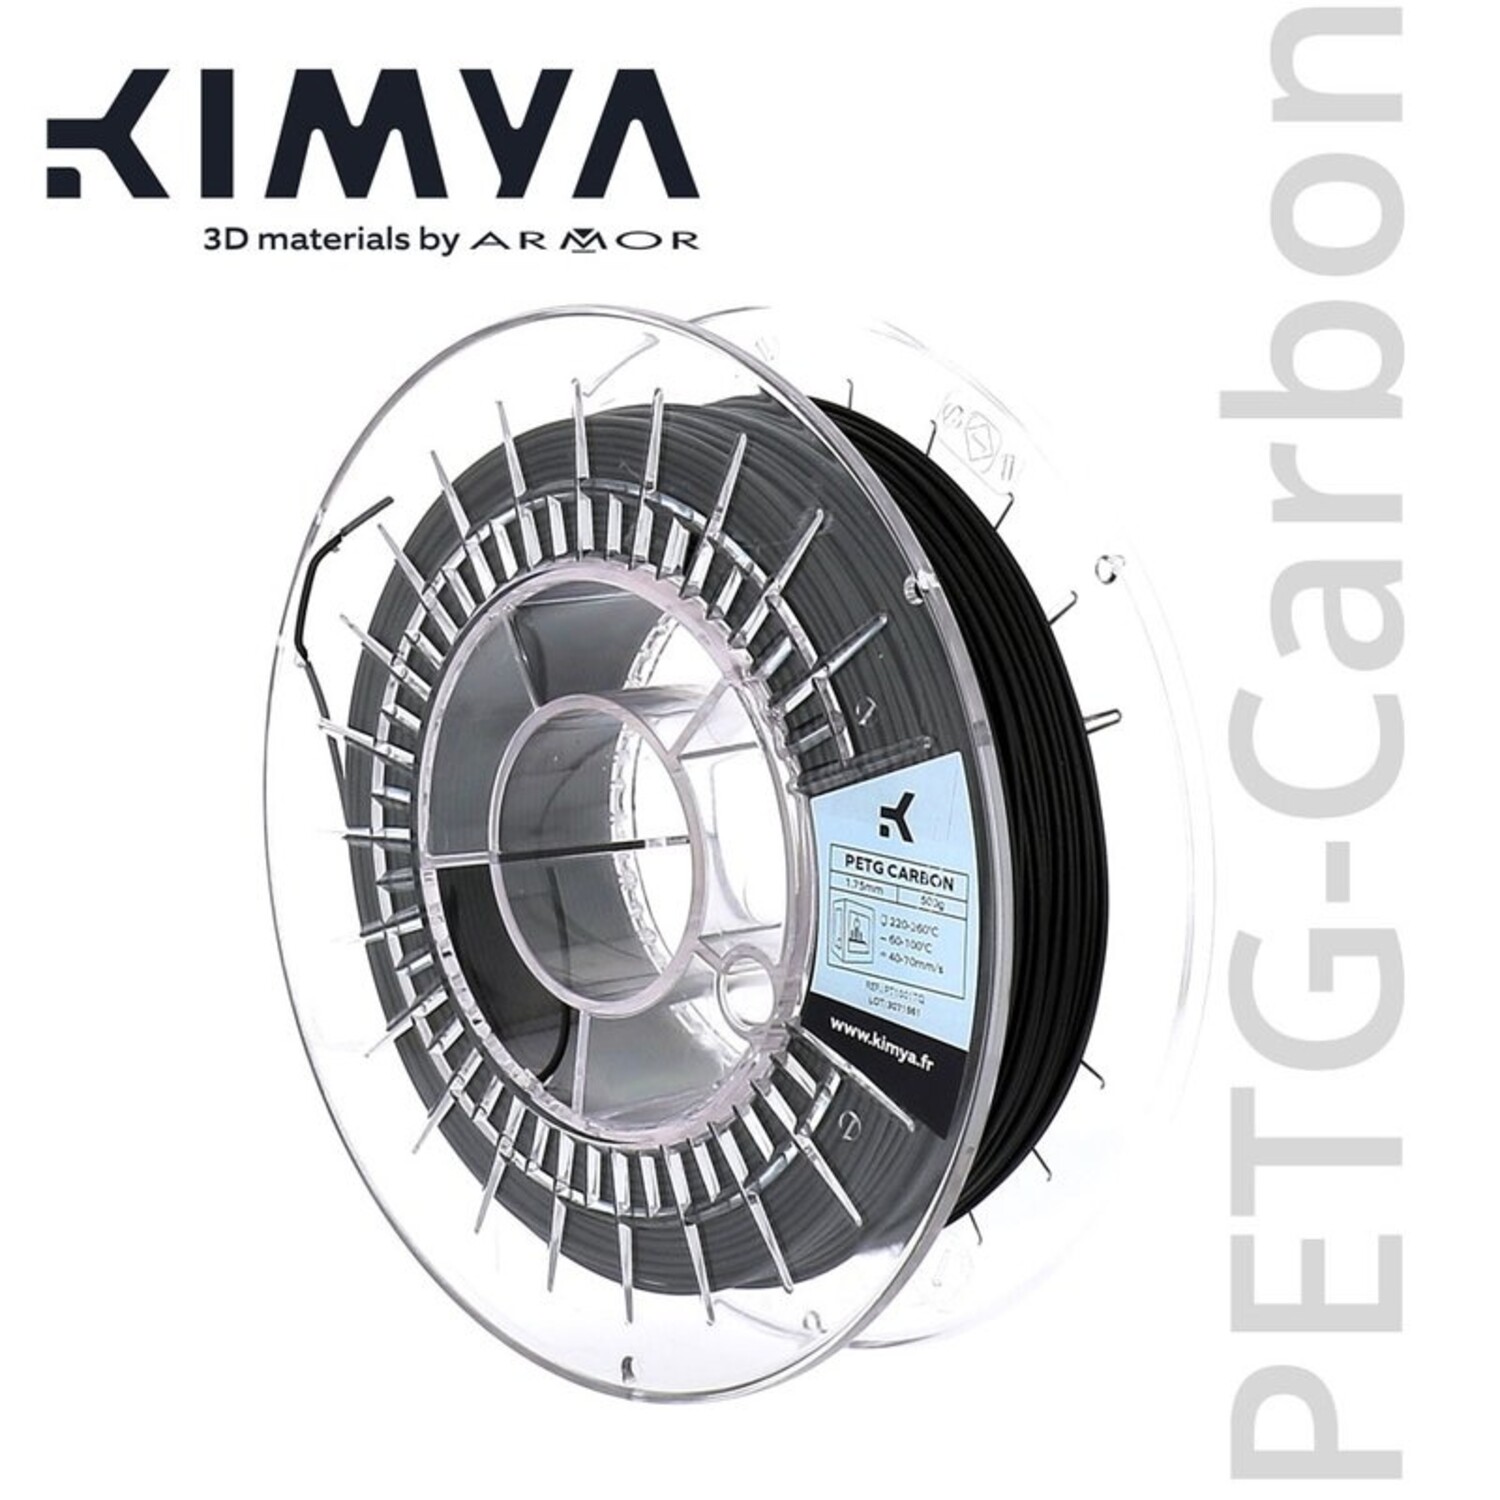 Kimya Kimya PETG Carbon Filament - 500 g - Zwart